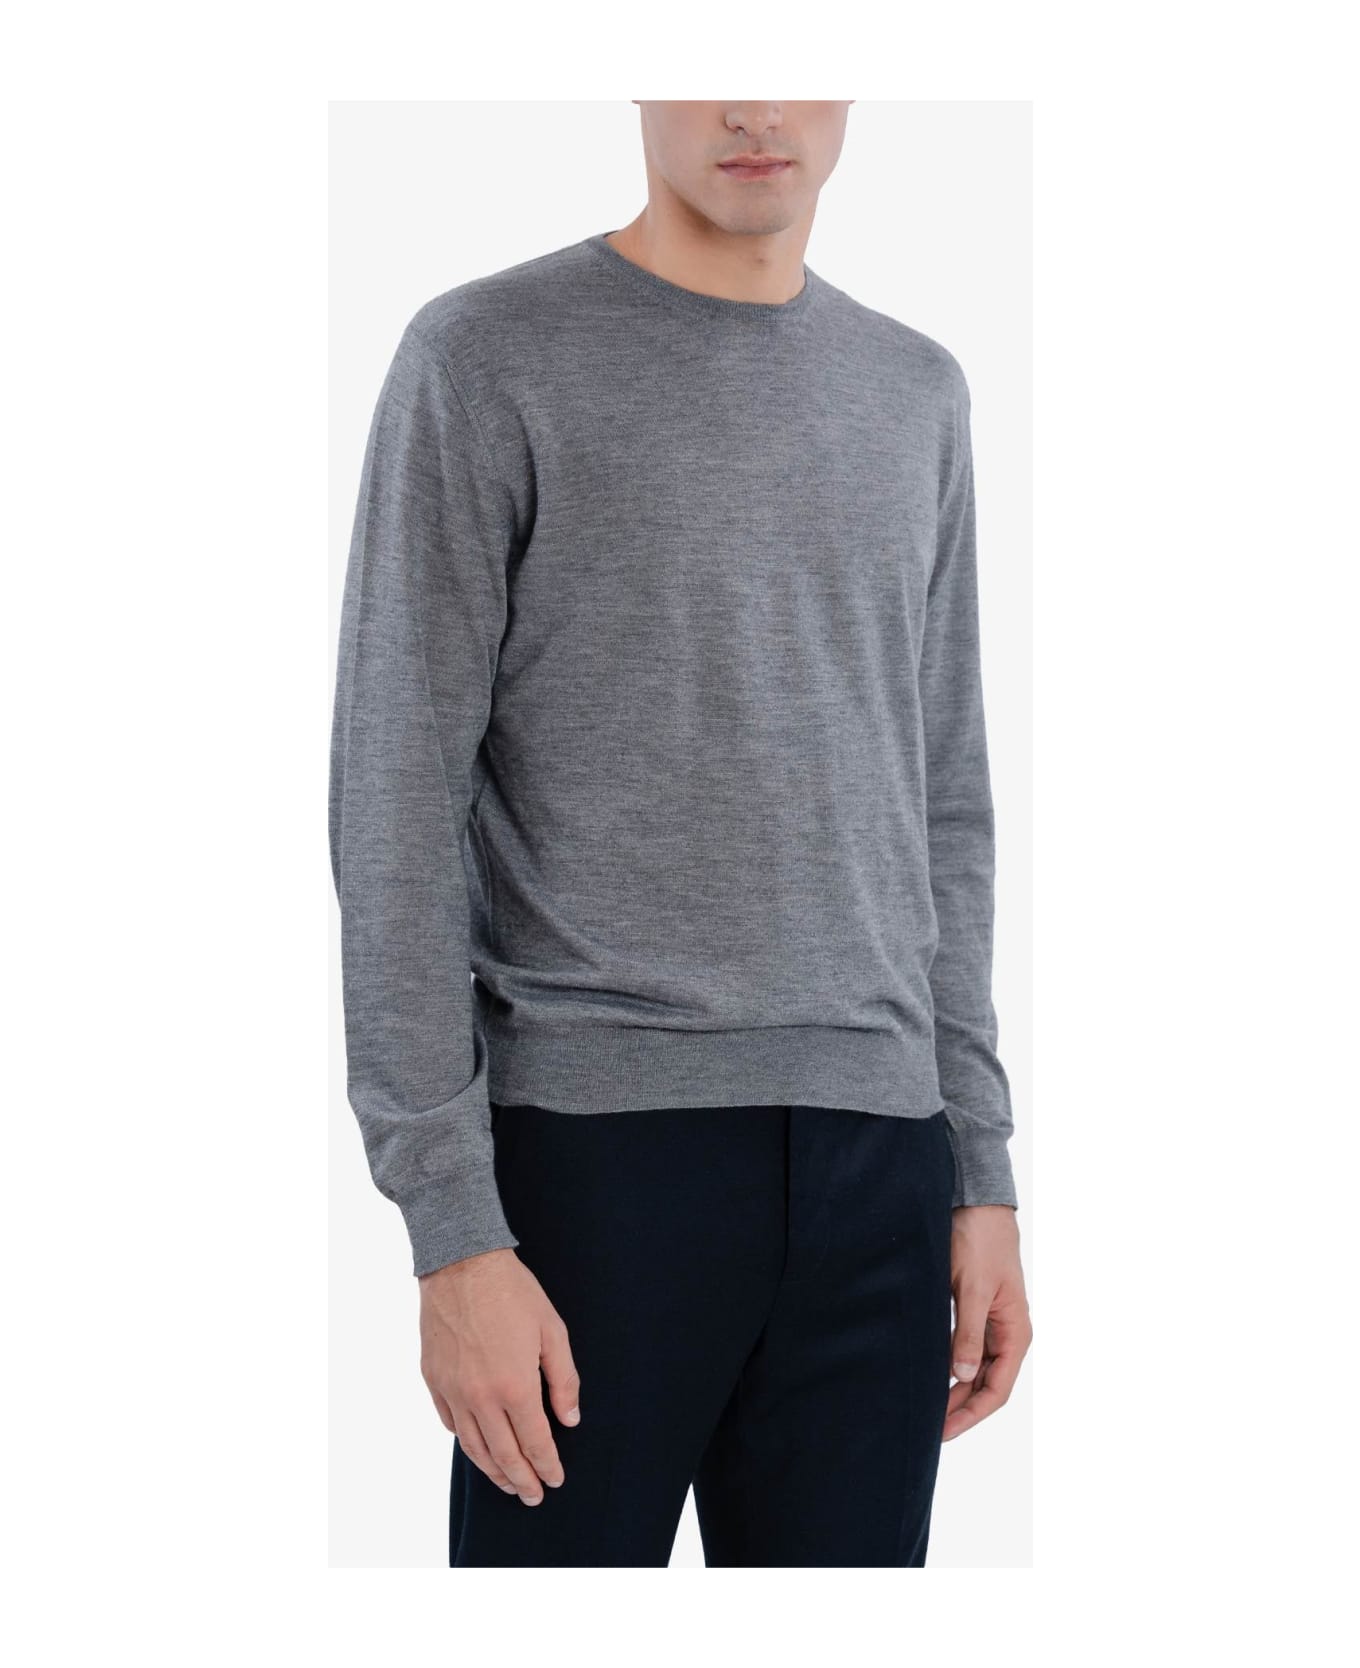 Larusmiani Sweater 'pullman' Sweater - DimGray